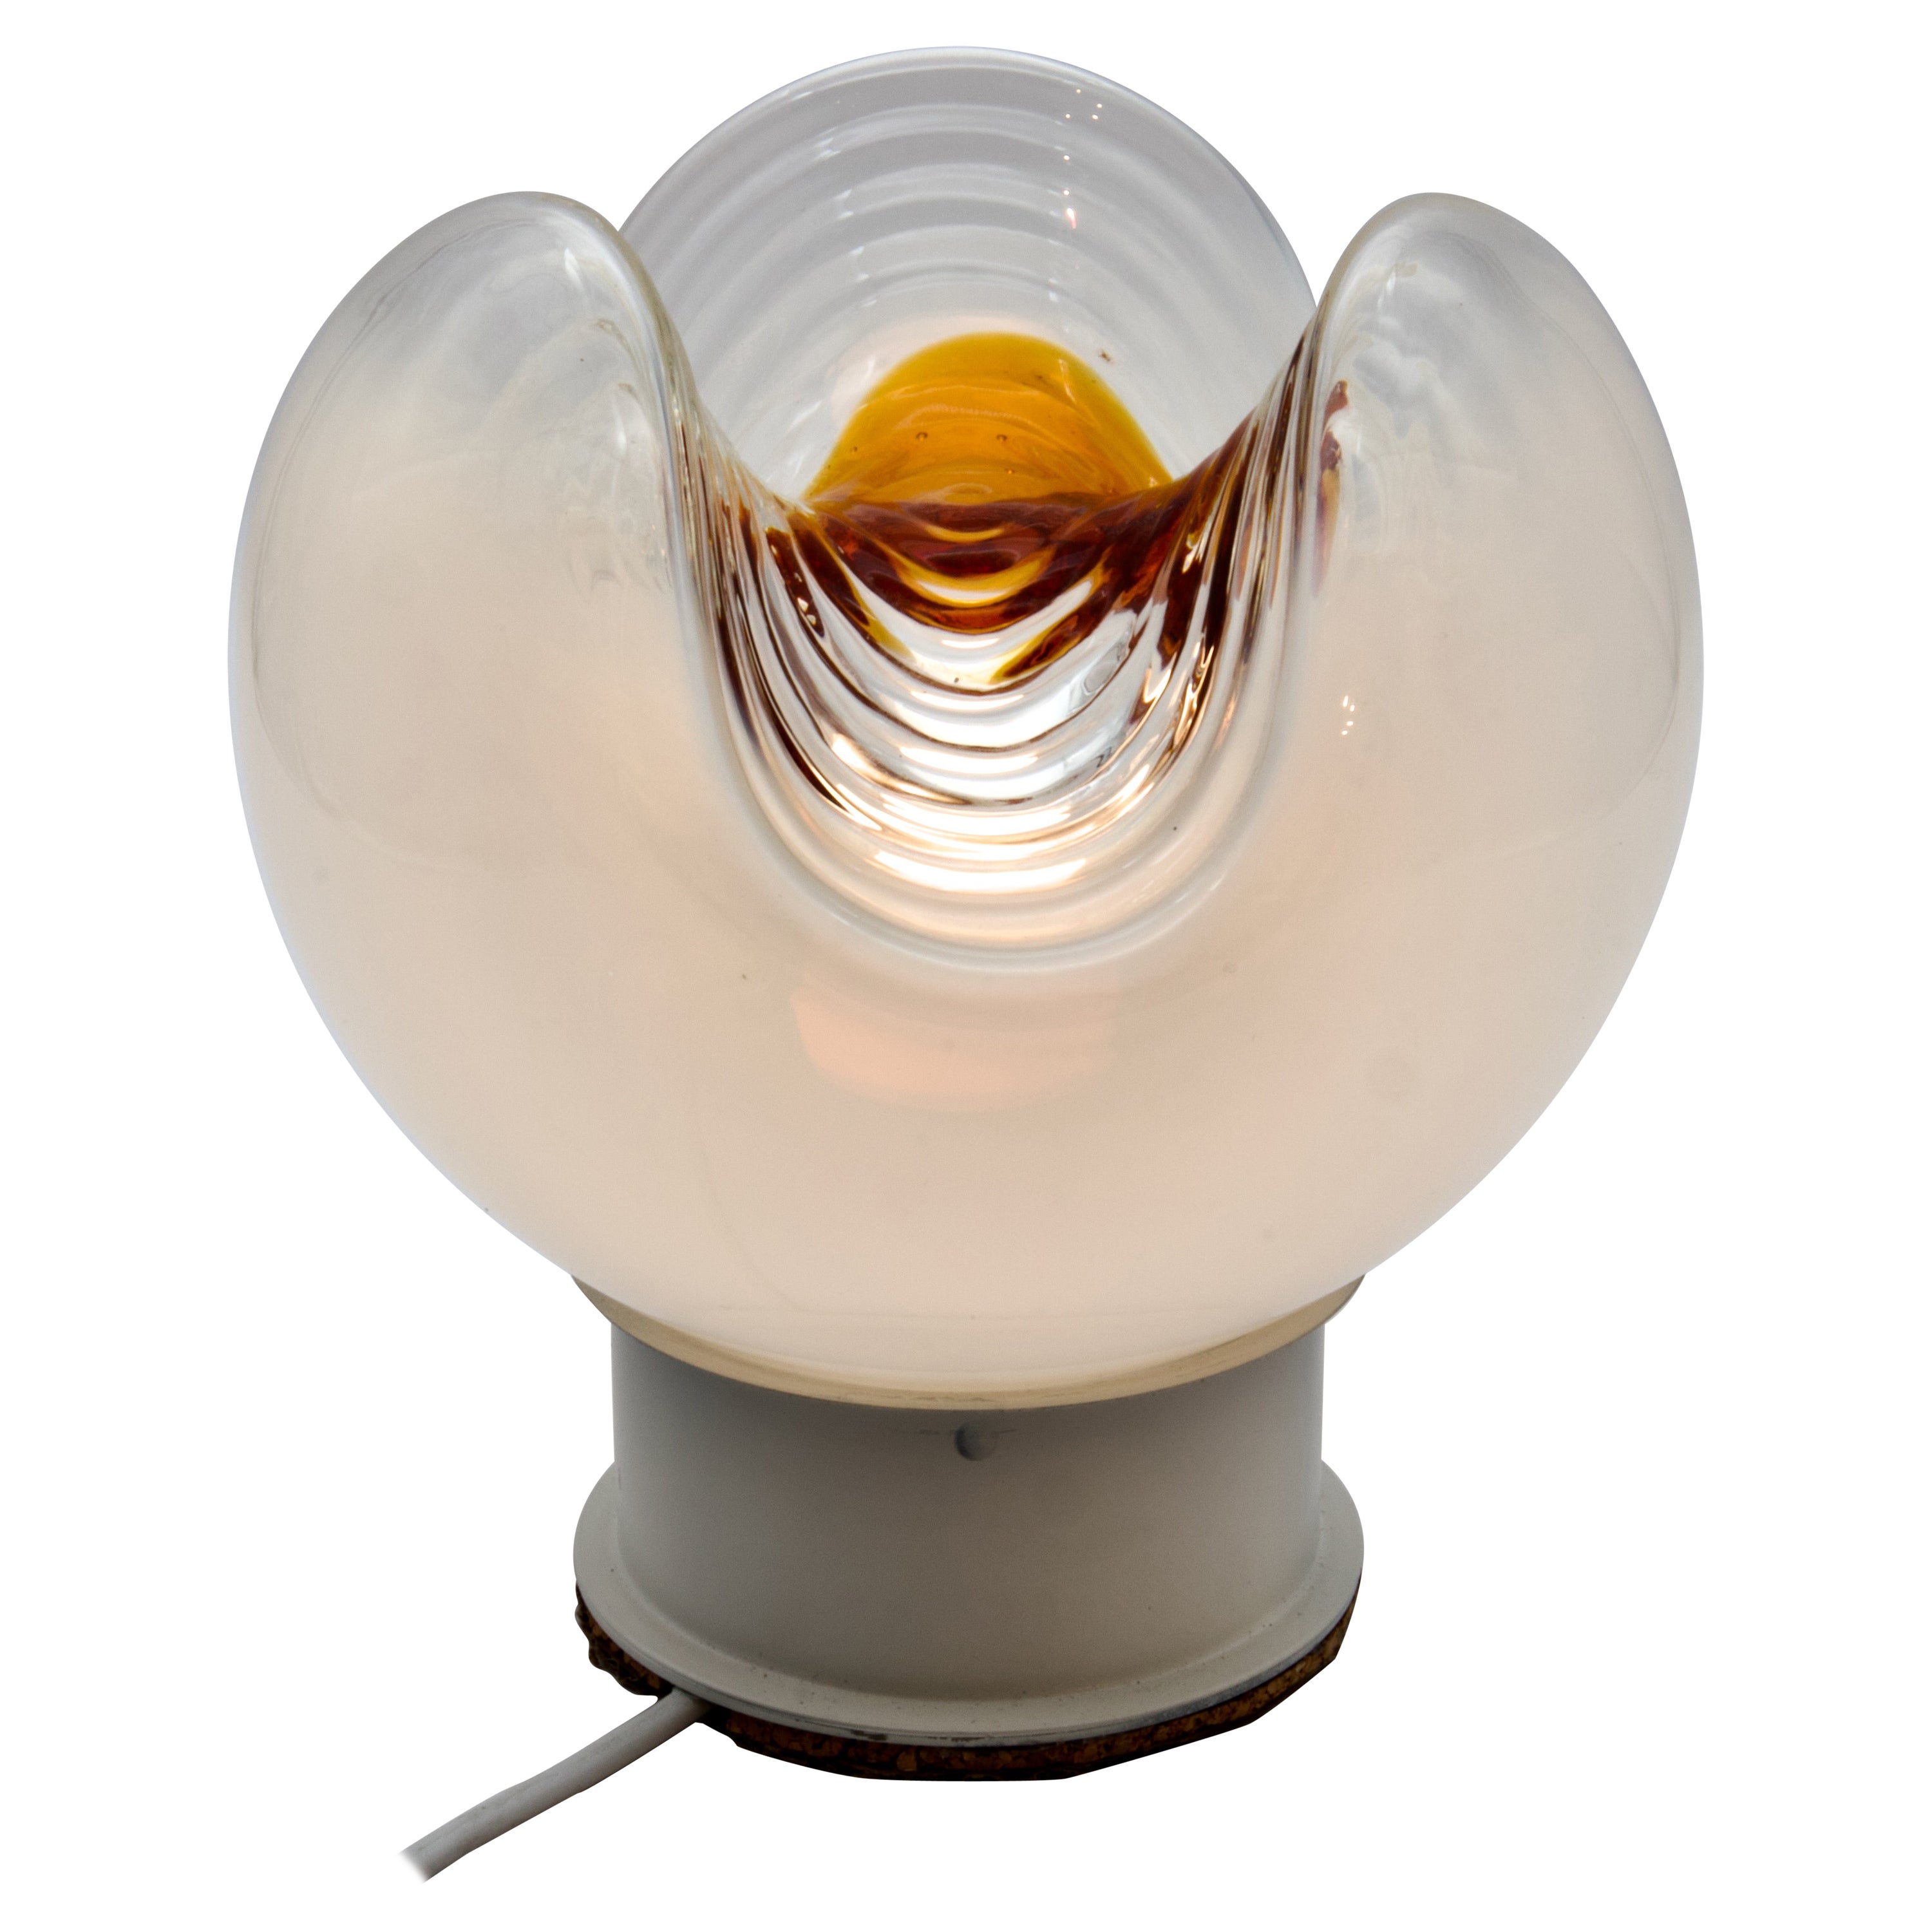 Mesmerizing XL Murano Glass Table Lamp or Floor Lamp, Mazzega Italy 1970s